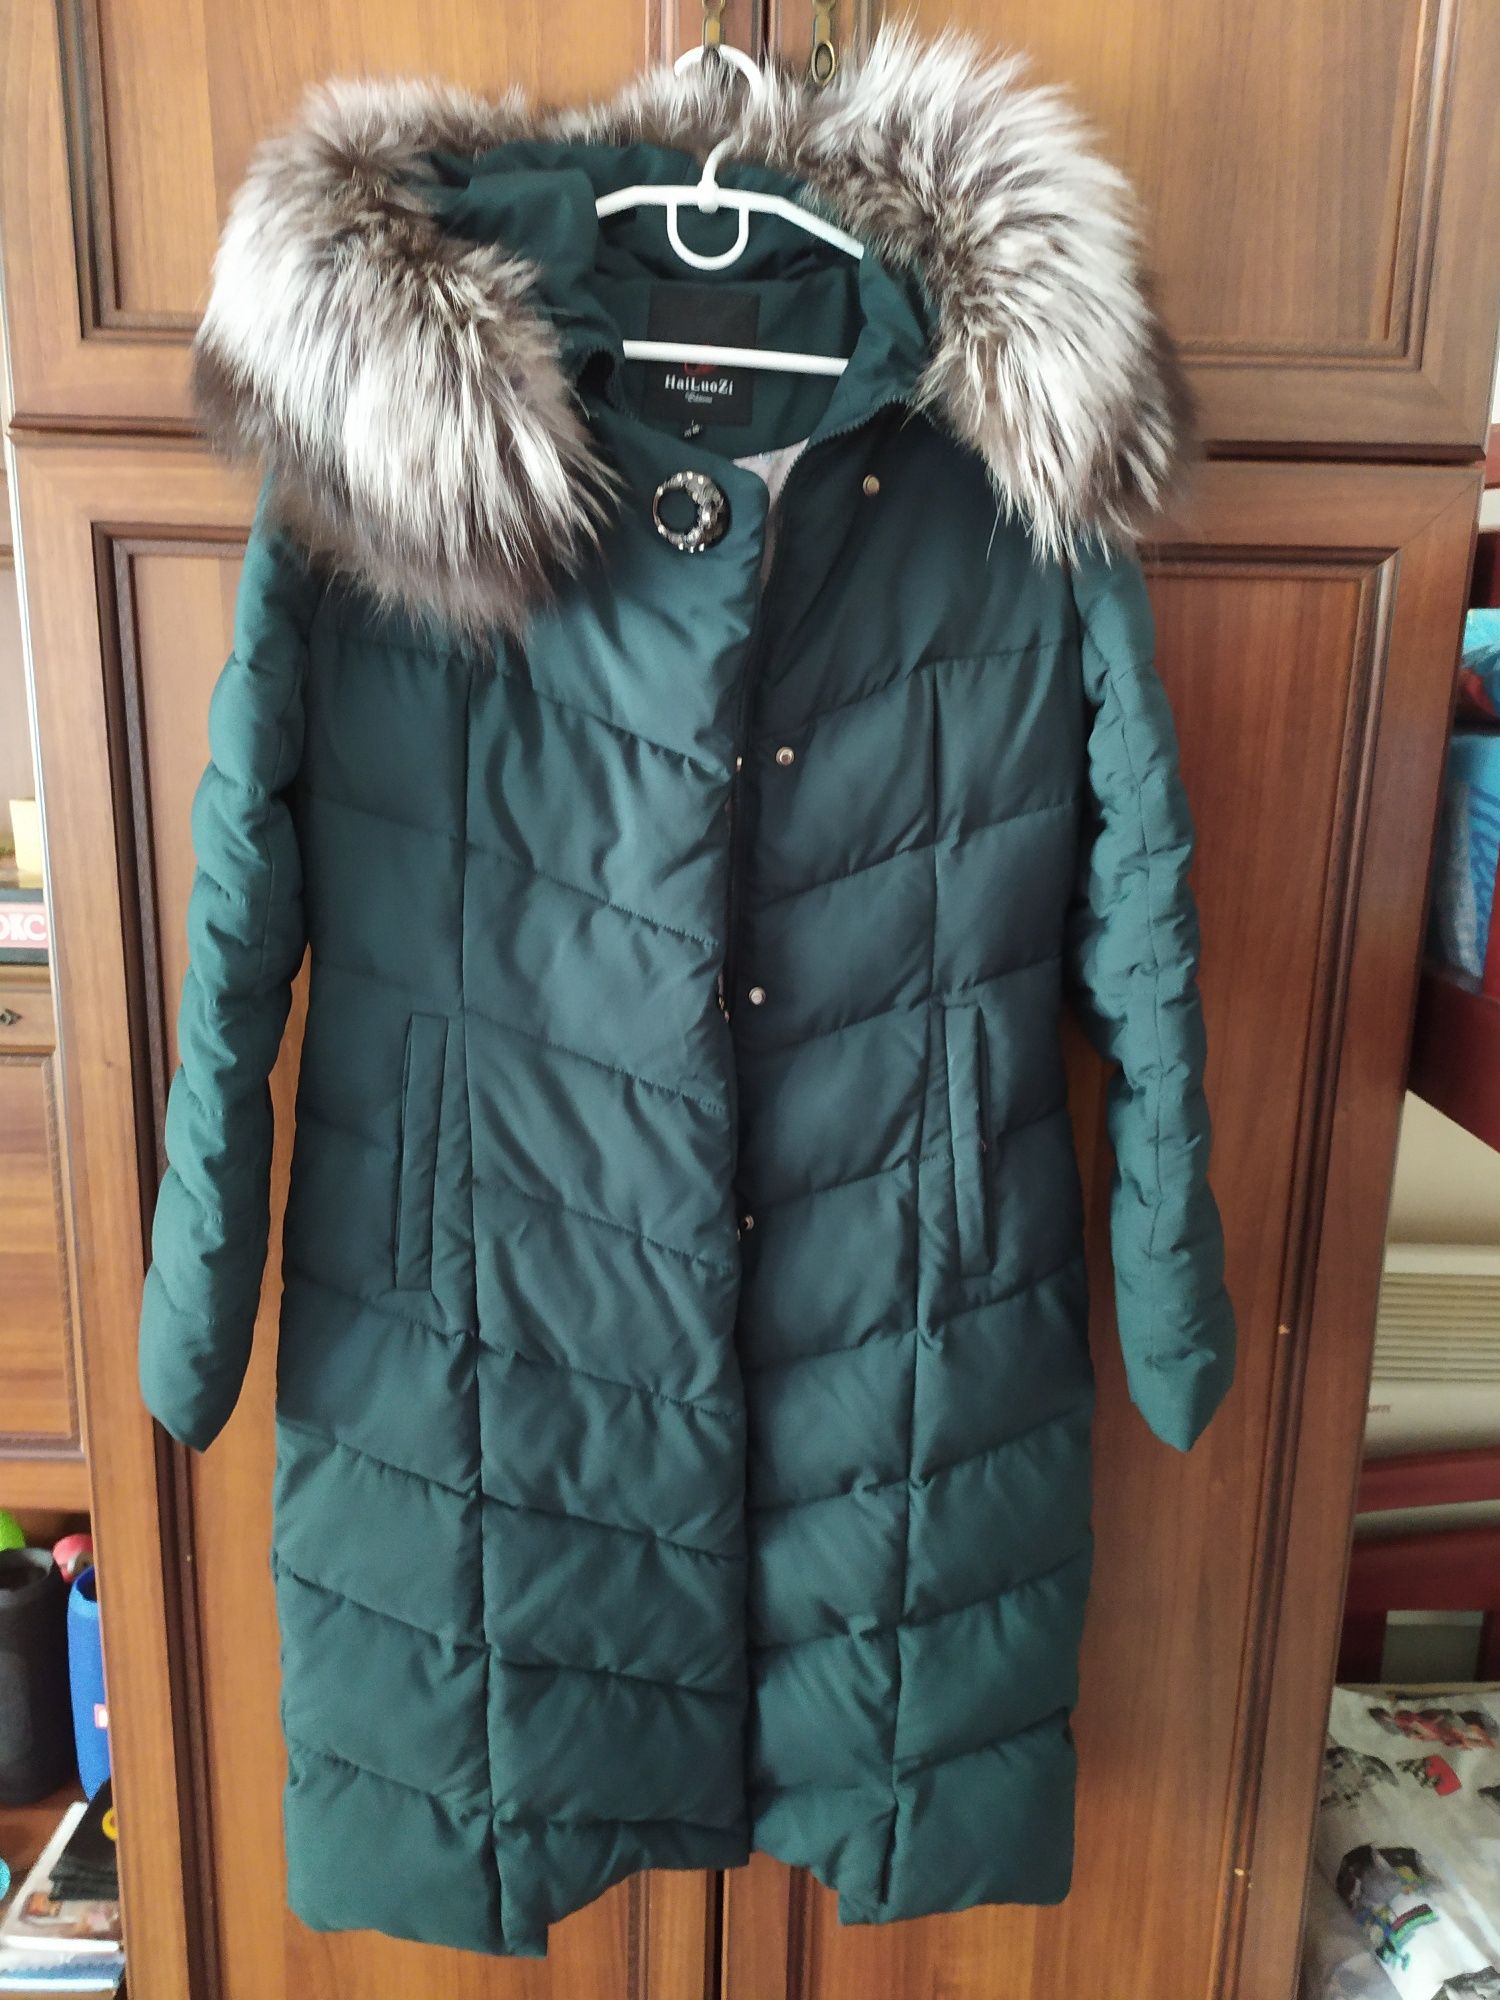 Зимове жіноче пальто